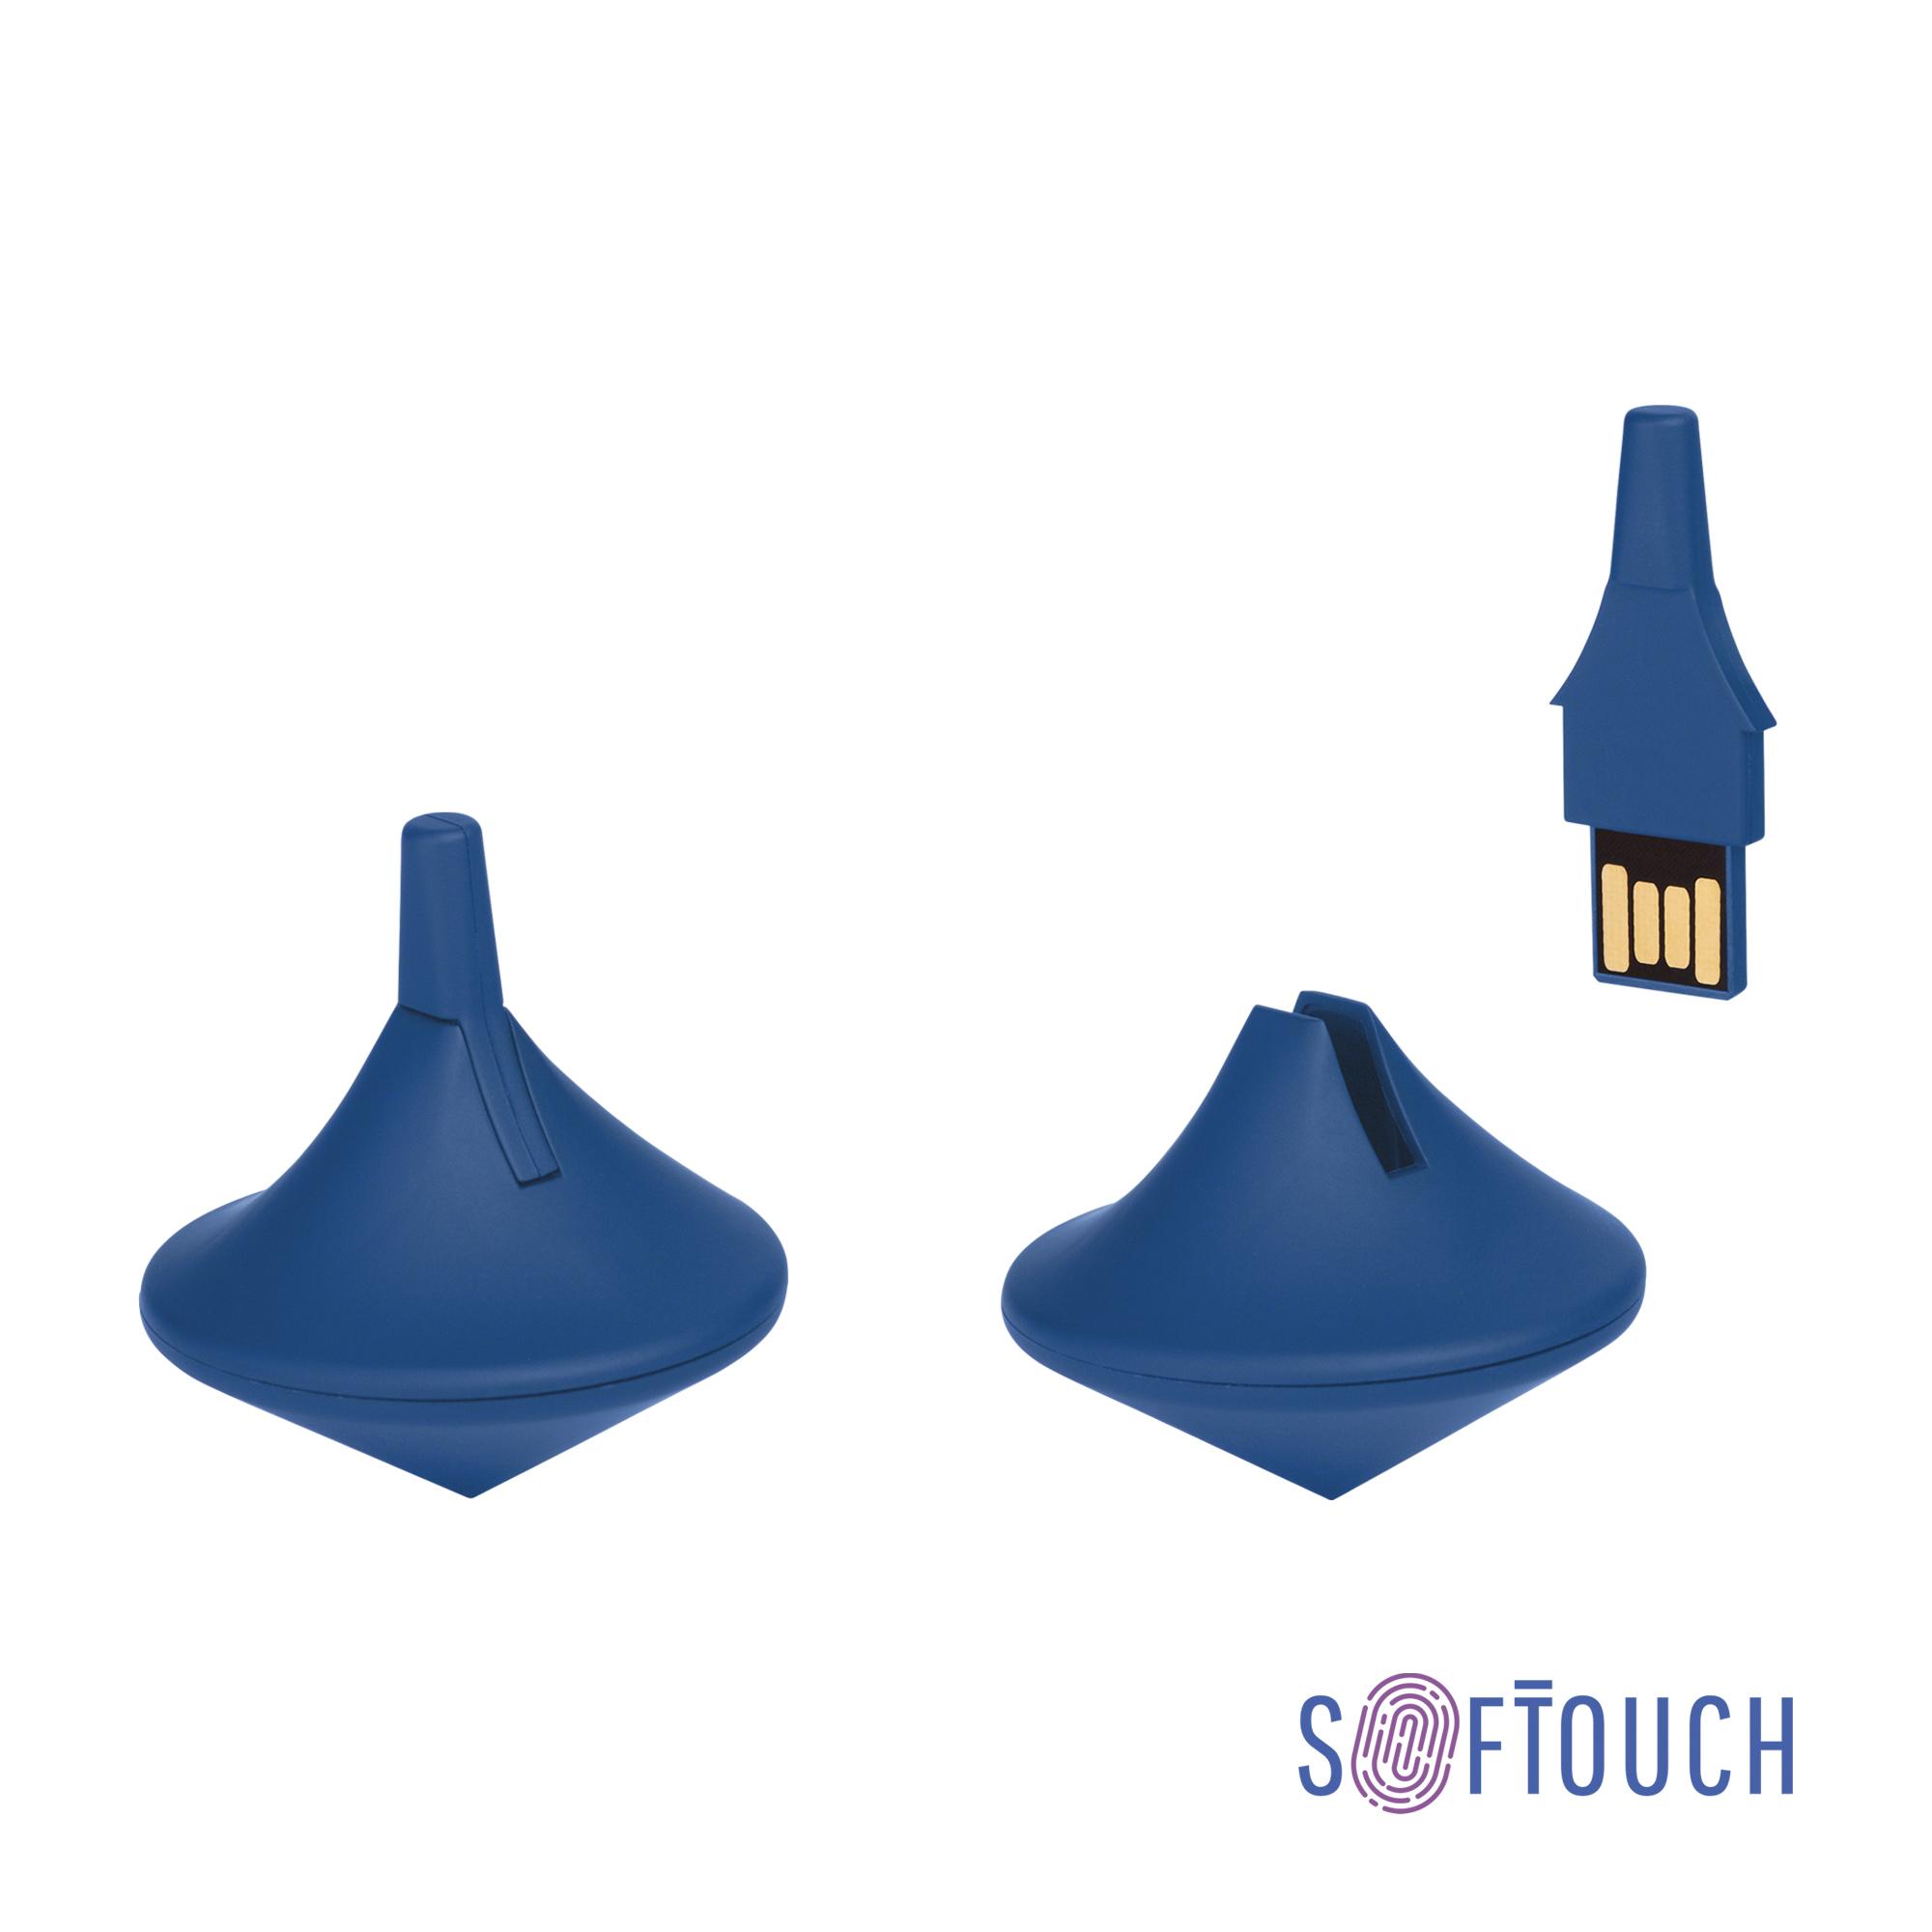 Флеш-карта-антистресс "Volchok", объем памяти 16GB, темно-синий, покрытие soft touch, цвет темно-синий